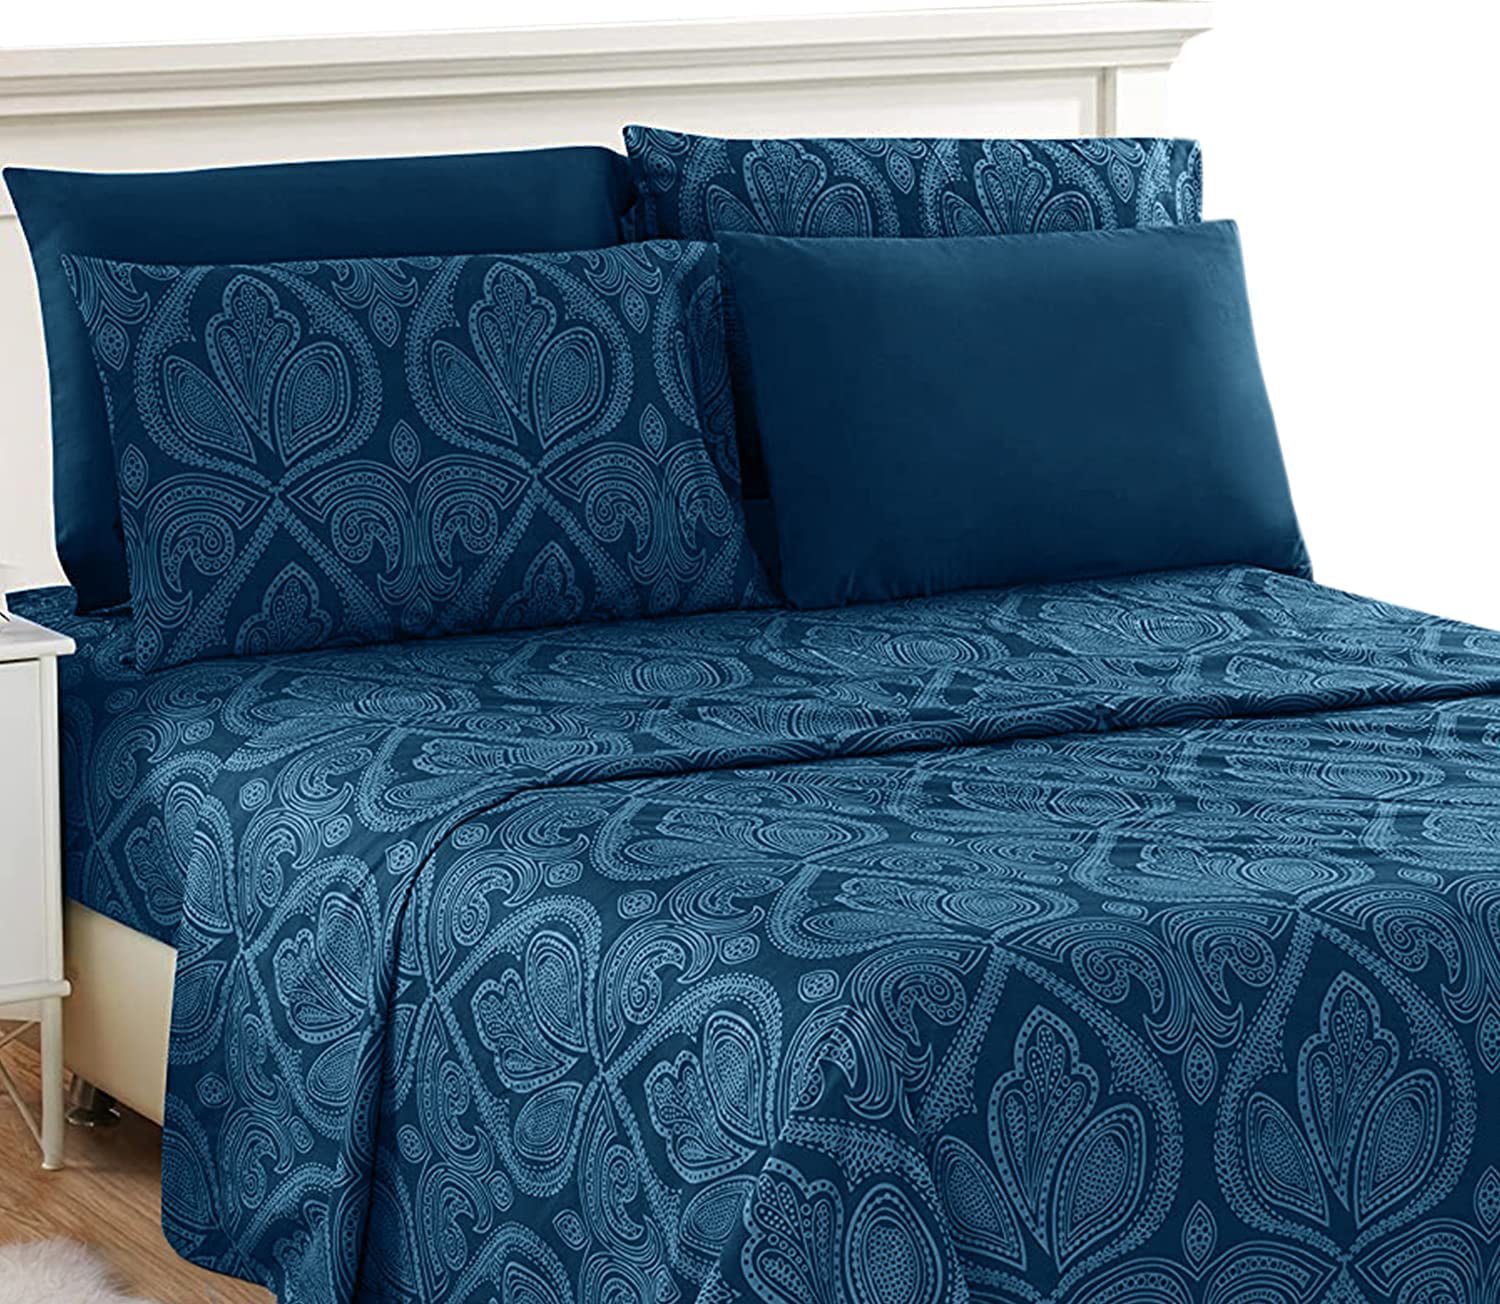 King Size Bed Sheet Set Navy Blue 6, King Size Bed Sheet Size